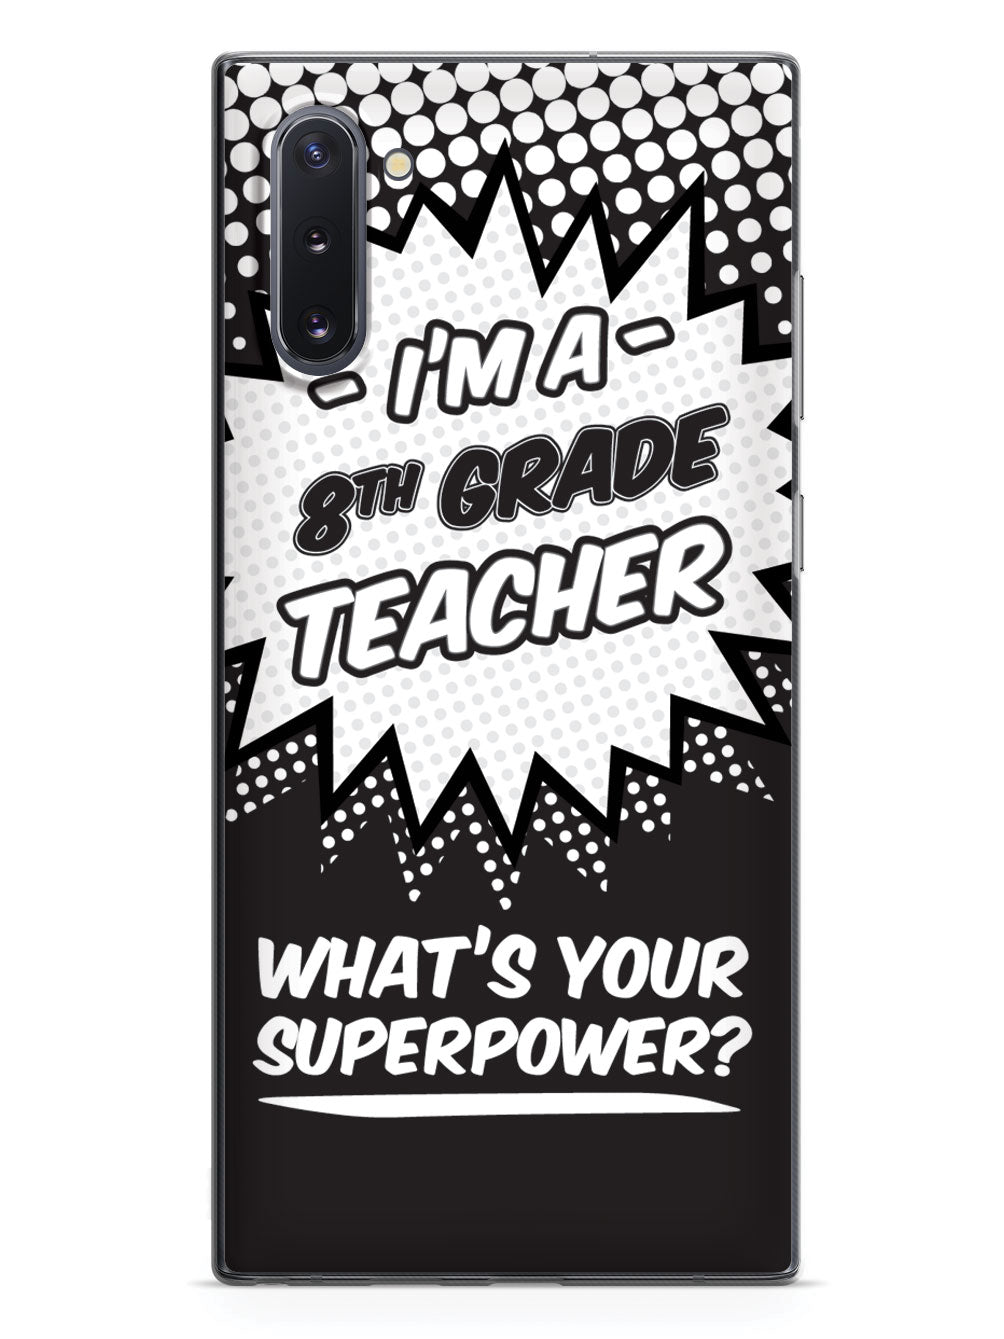 8th Grade Teacher - What's Your Superpower? Case